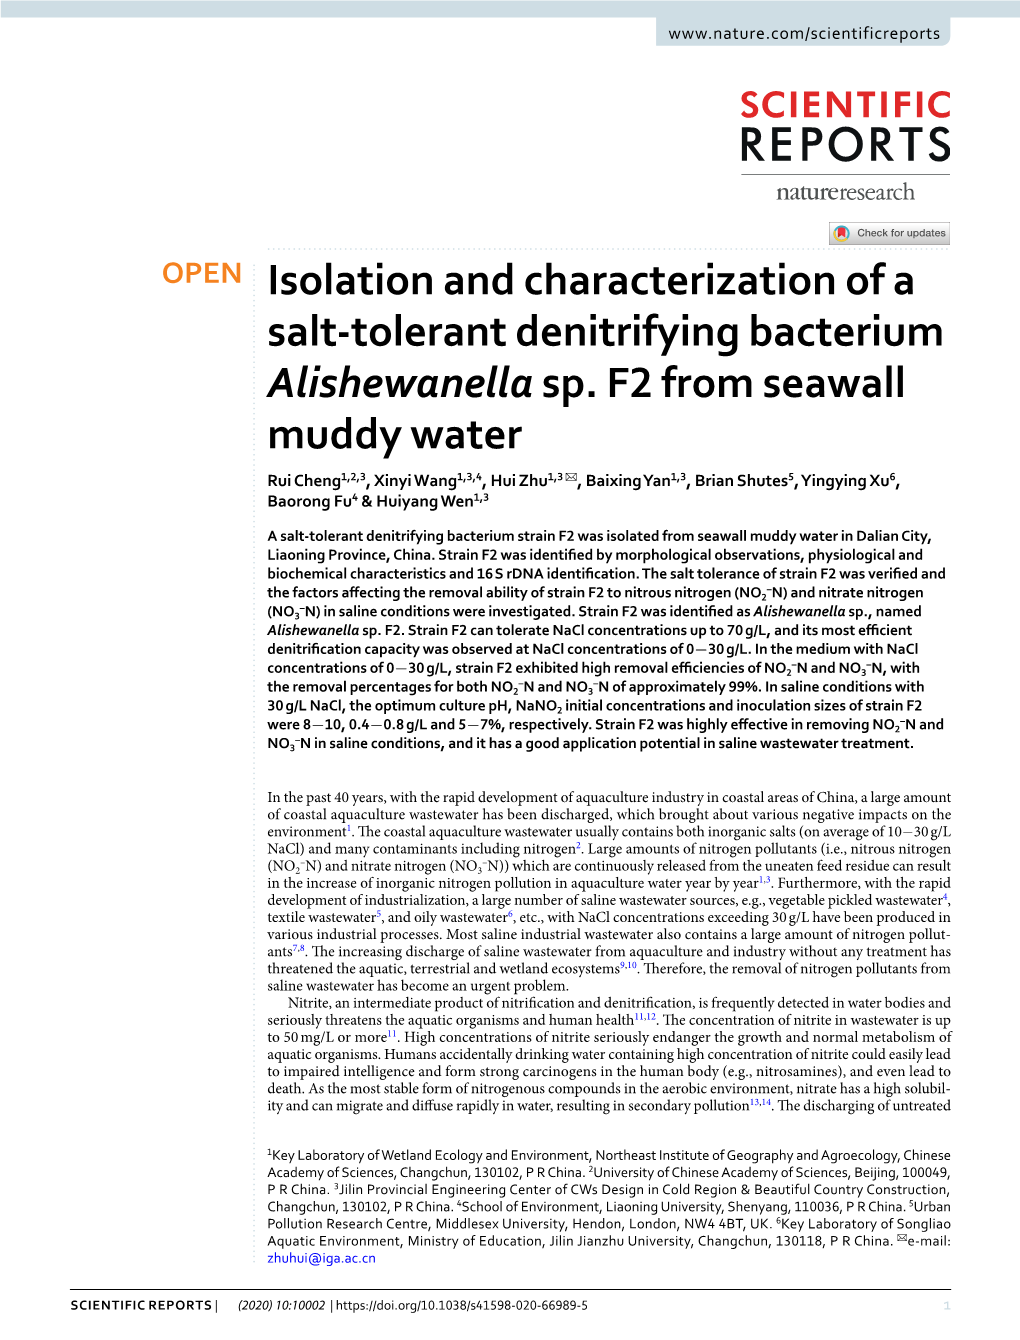 Isolation and Characterization of a Salt-Tolerant Denitrifying Bacterium Alishewanella Sp